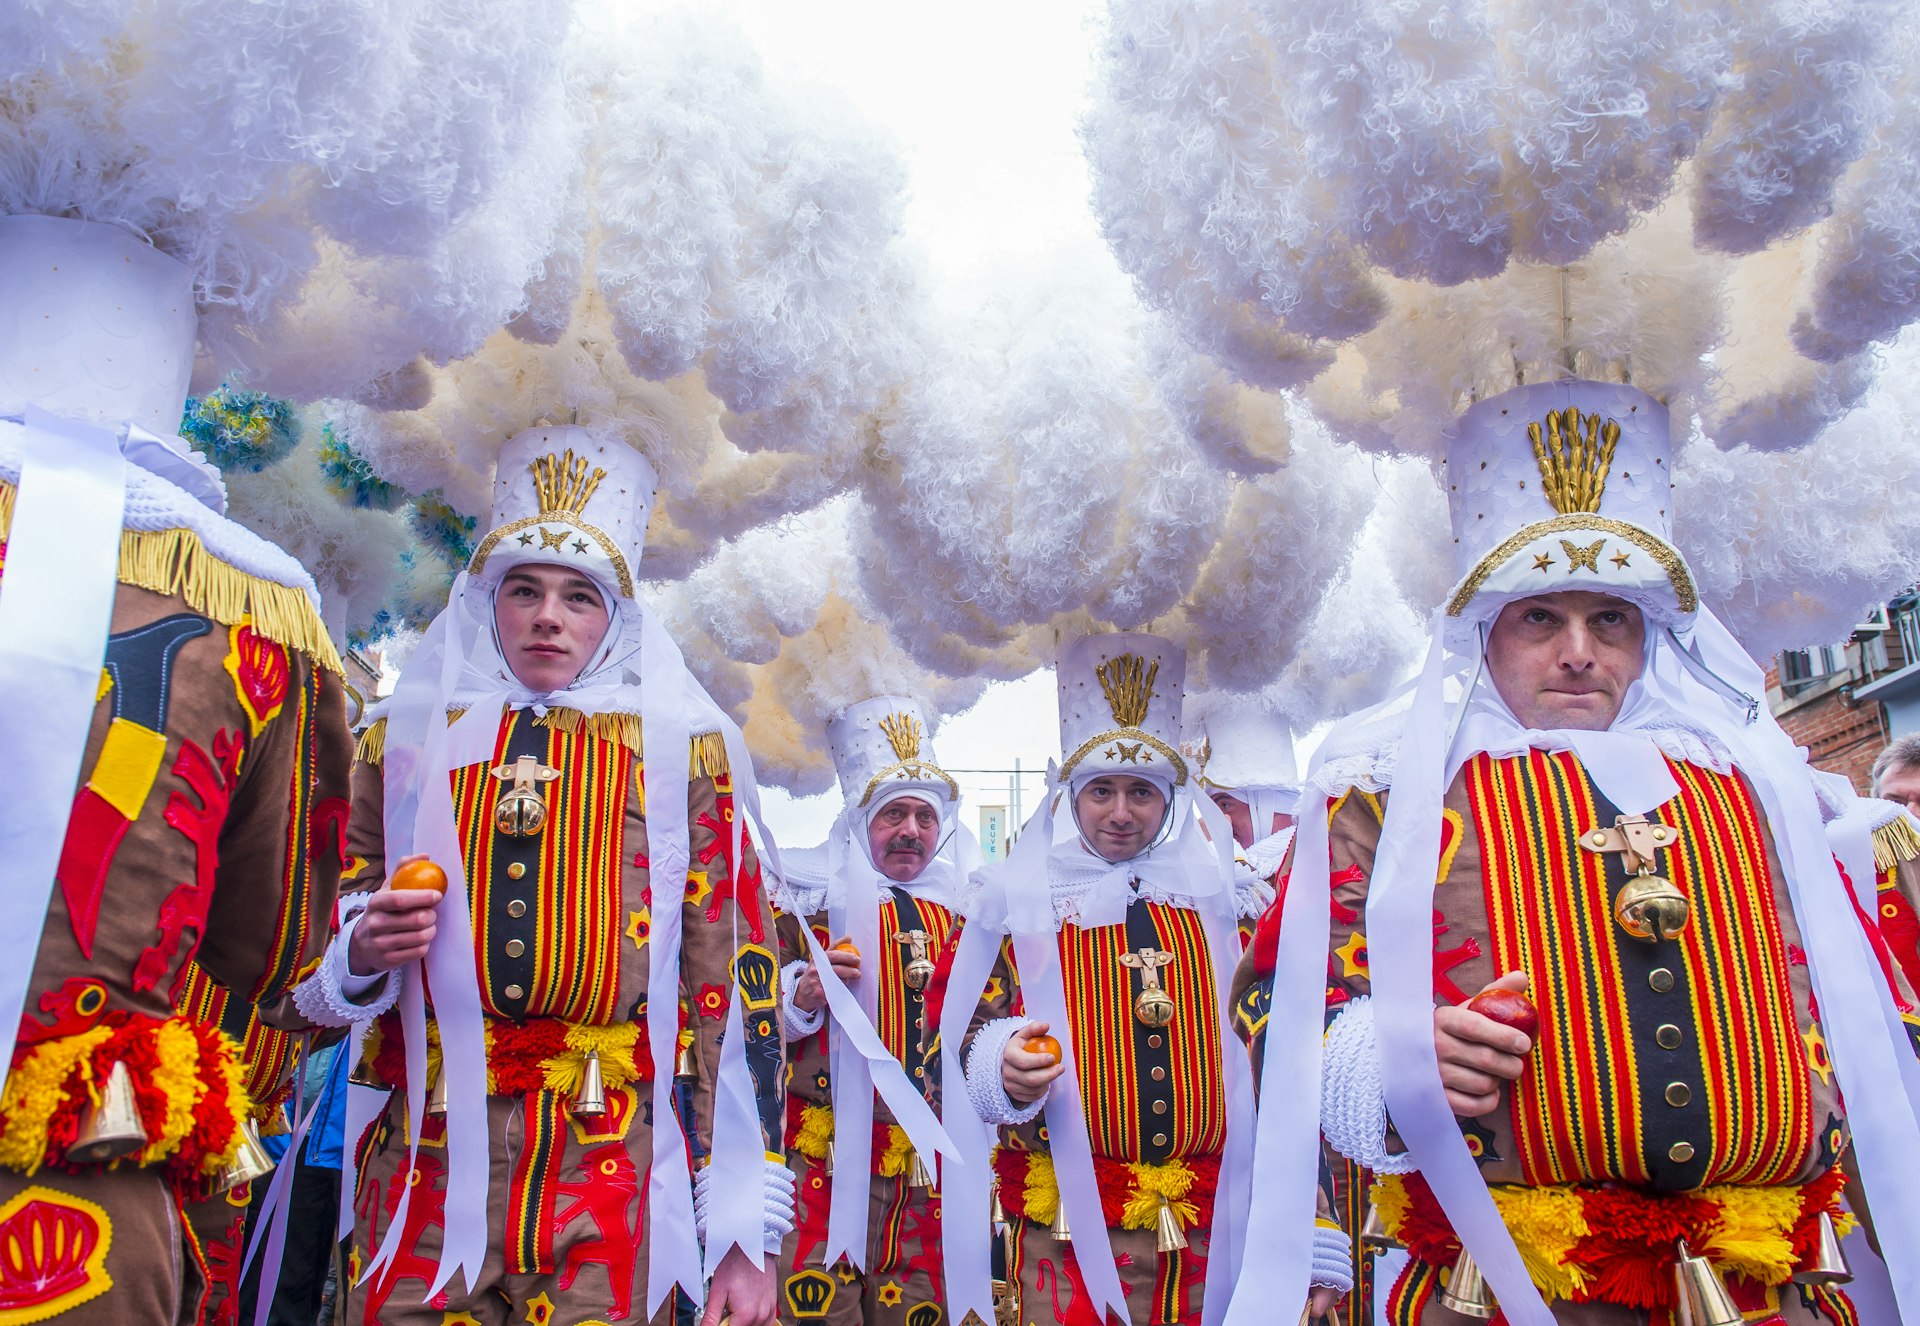 Participants in costume during the Binche Carnival, Belgium